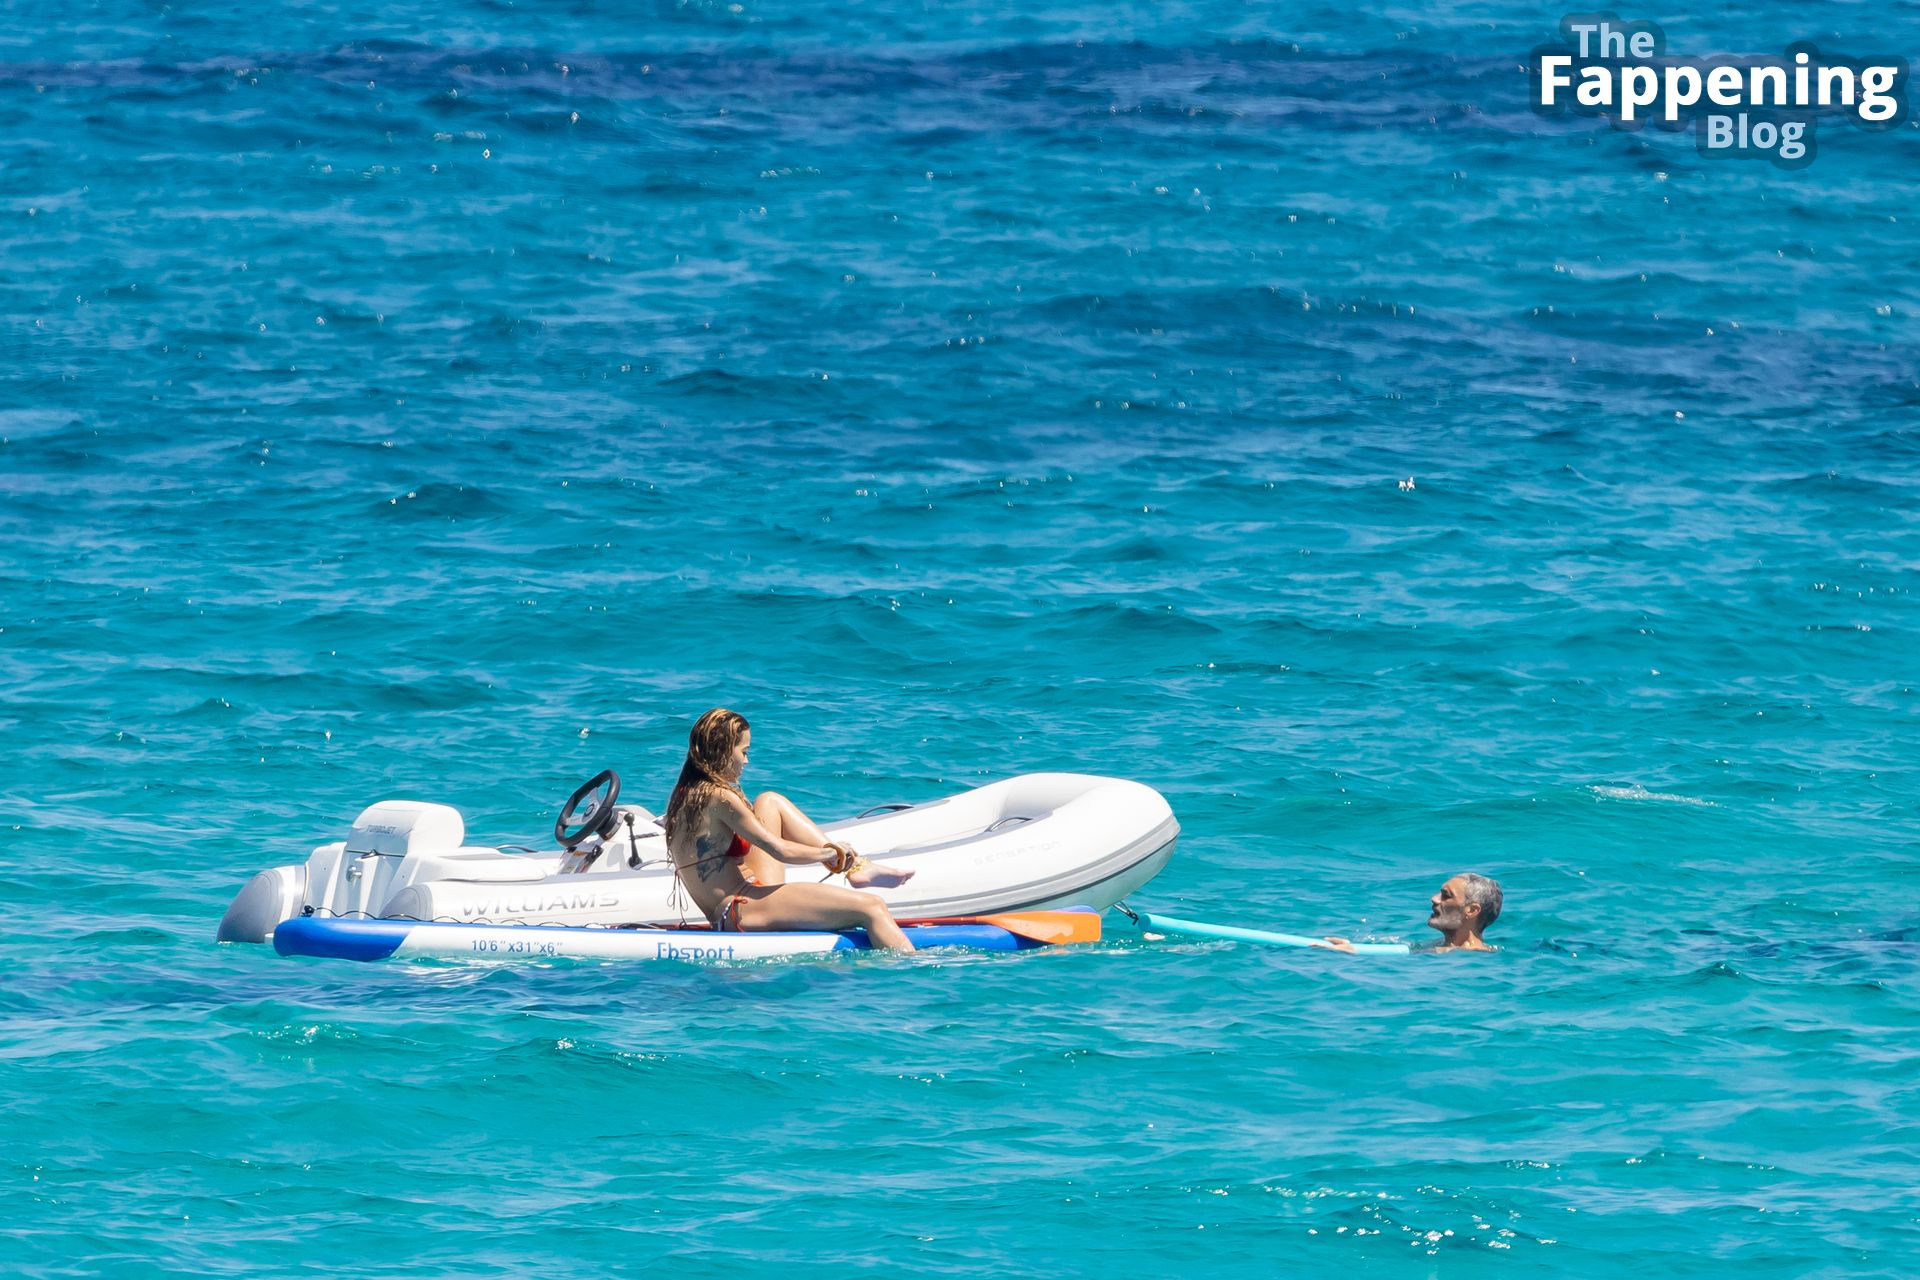 Rita Ora &amp; Taika Waititi Have Fun in The Sun in Formentera (94 Photos)